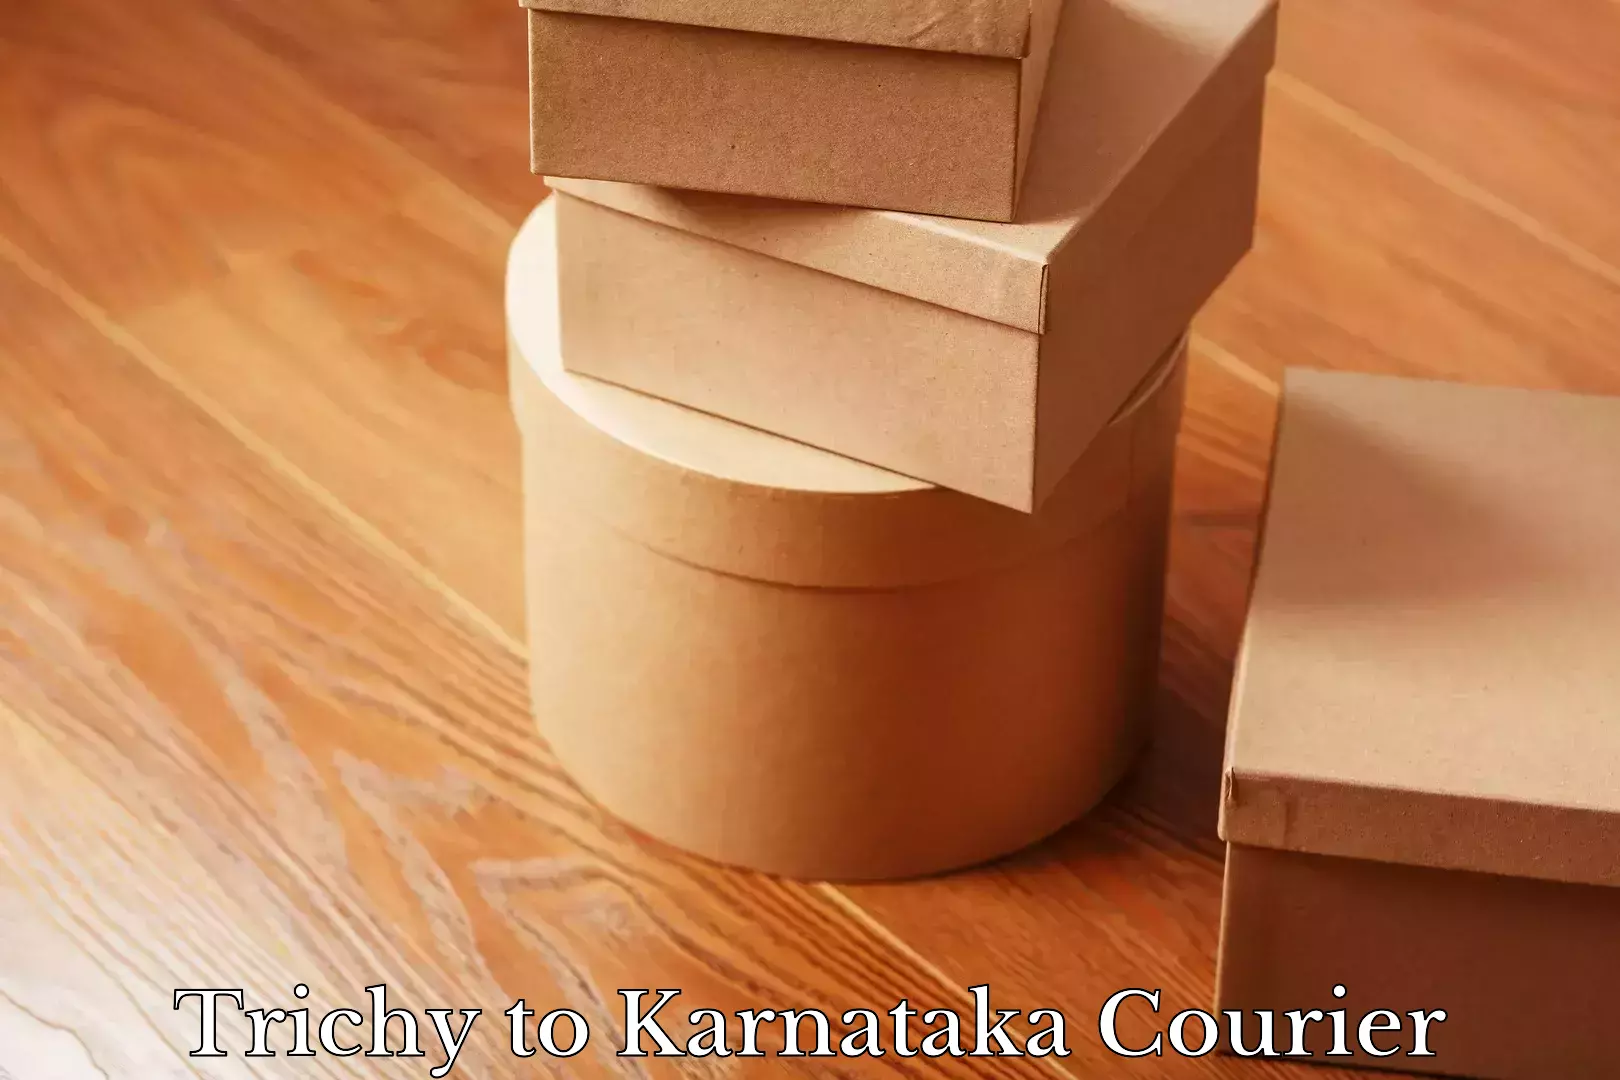 Modern courier technology Trichy to Karnataka